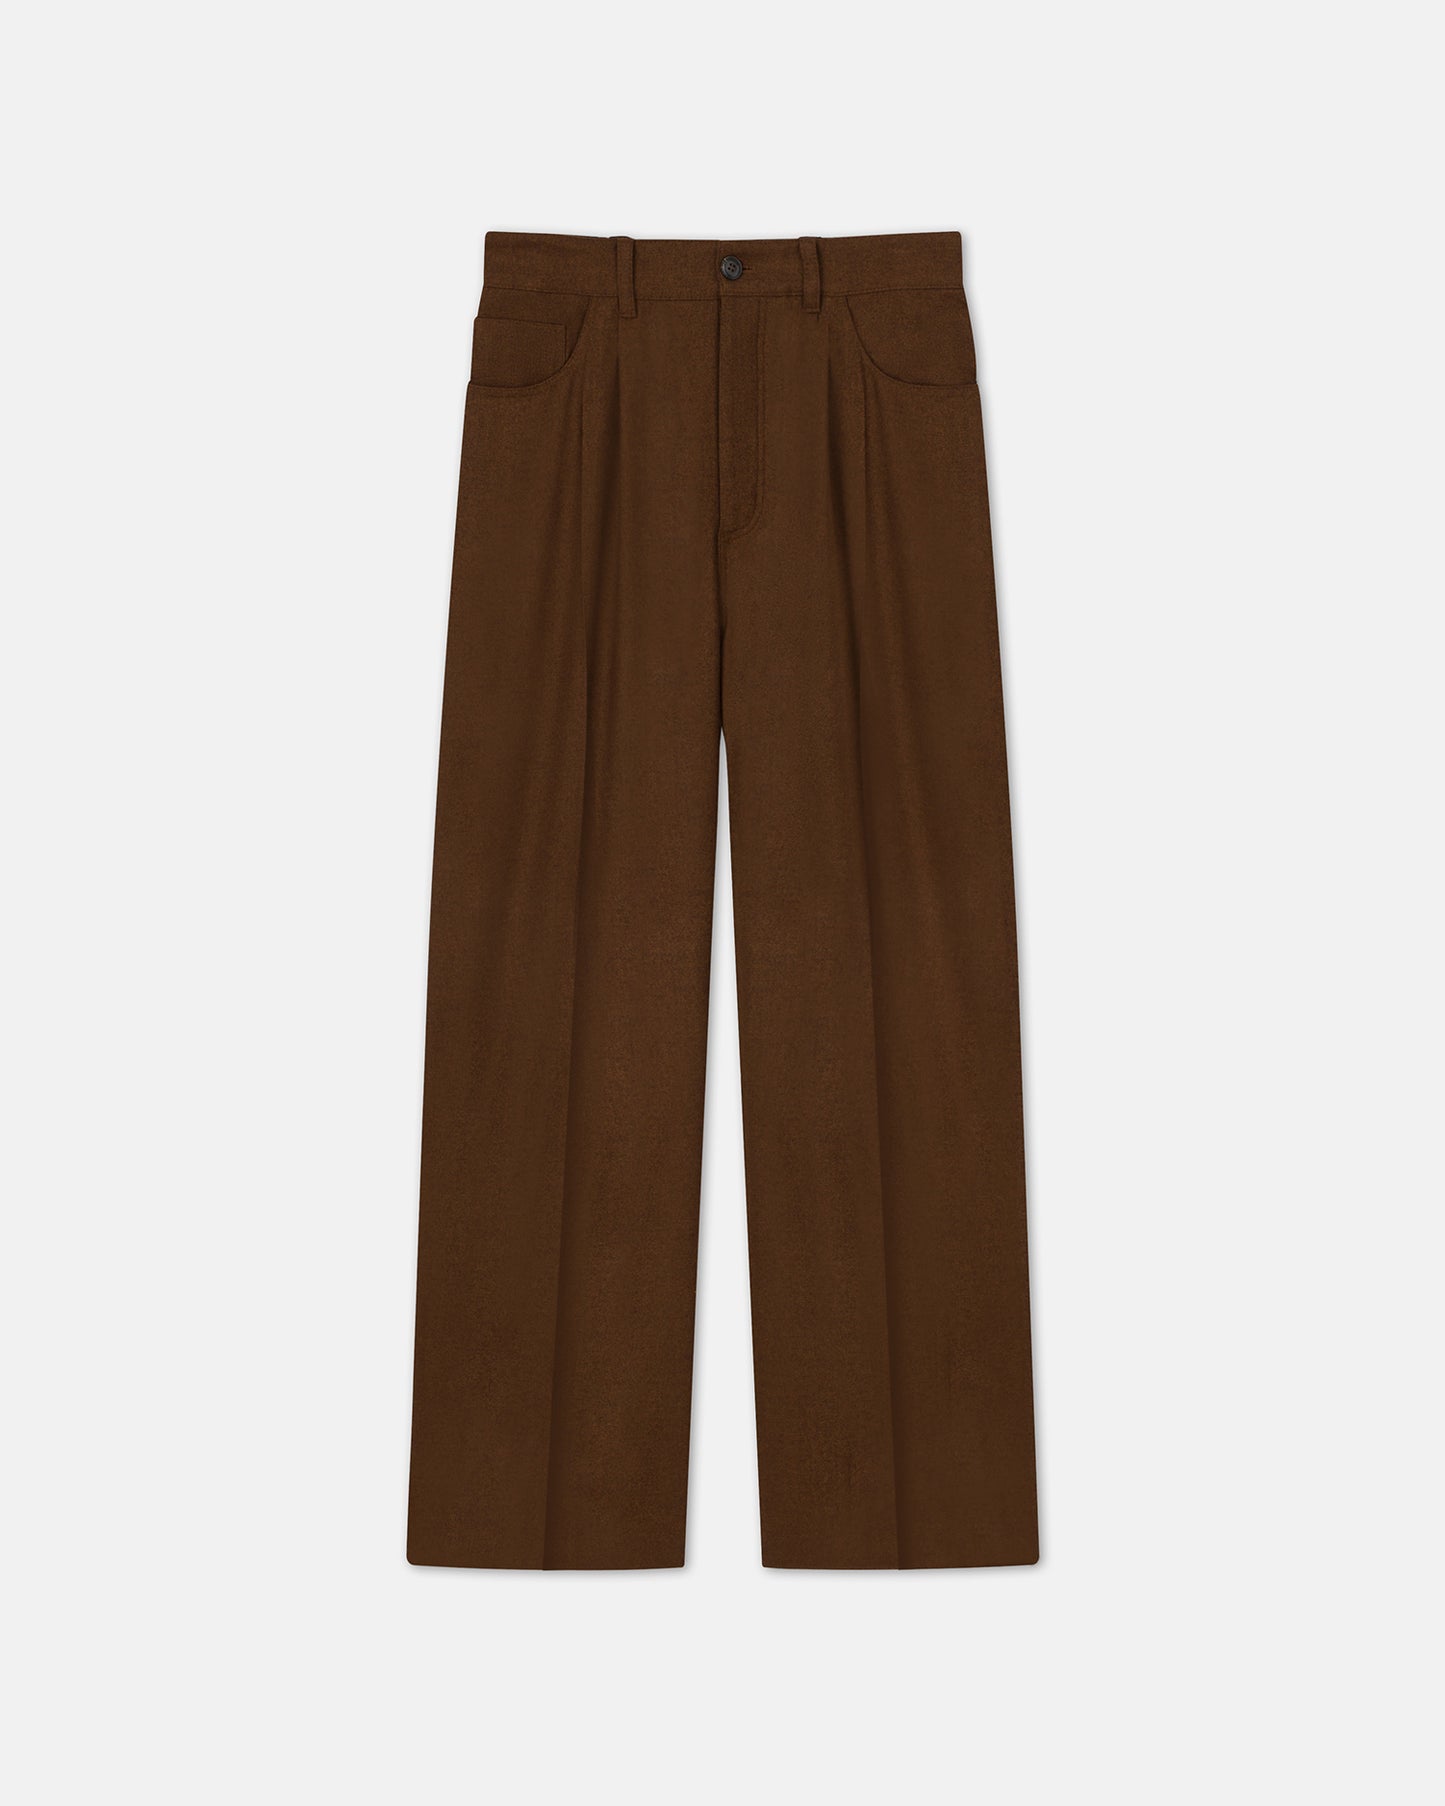 Elston - Barrel-Leg Wool Pants - Umber